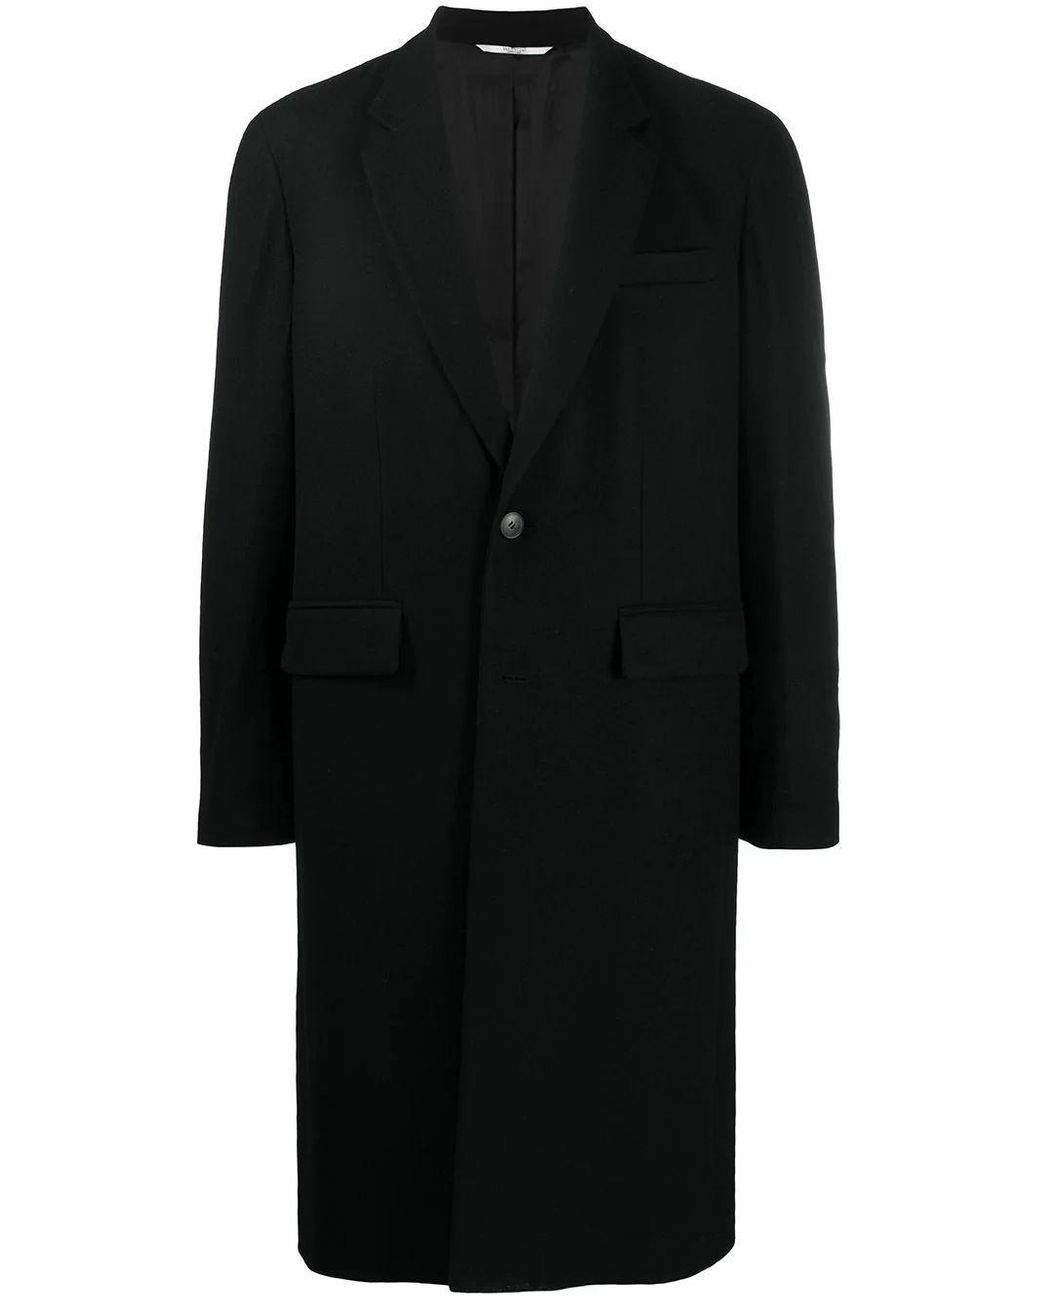 Valentino Wool Coat in Black for Men - Lyst